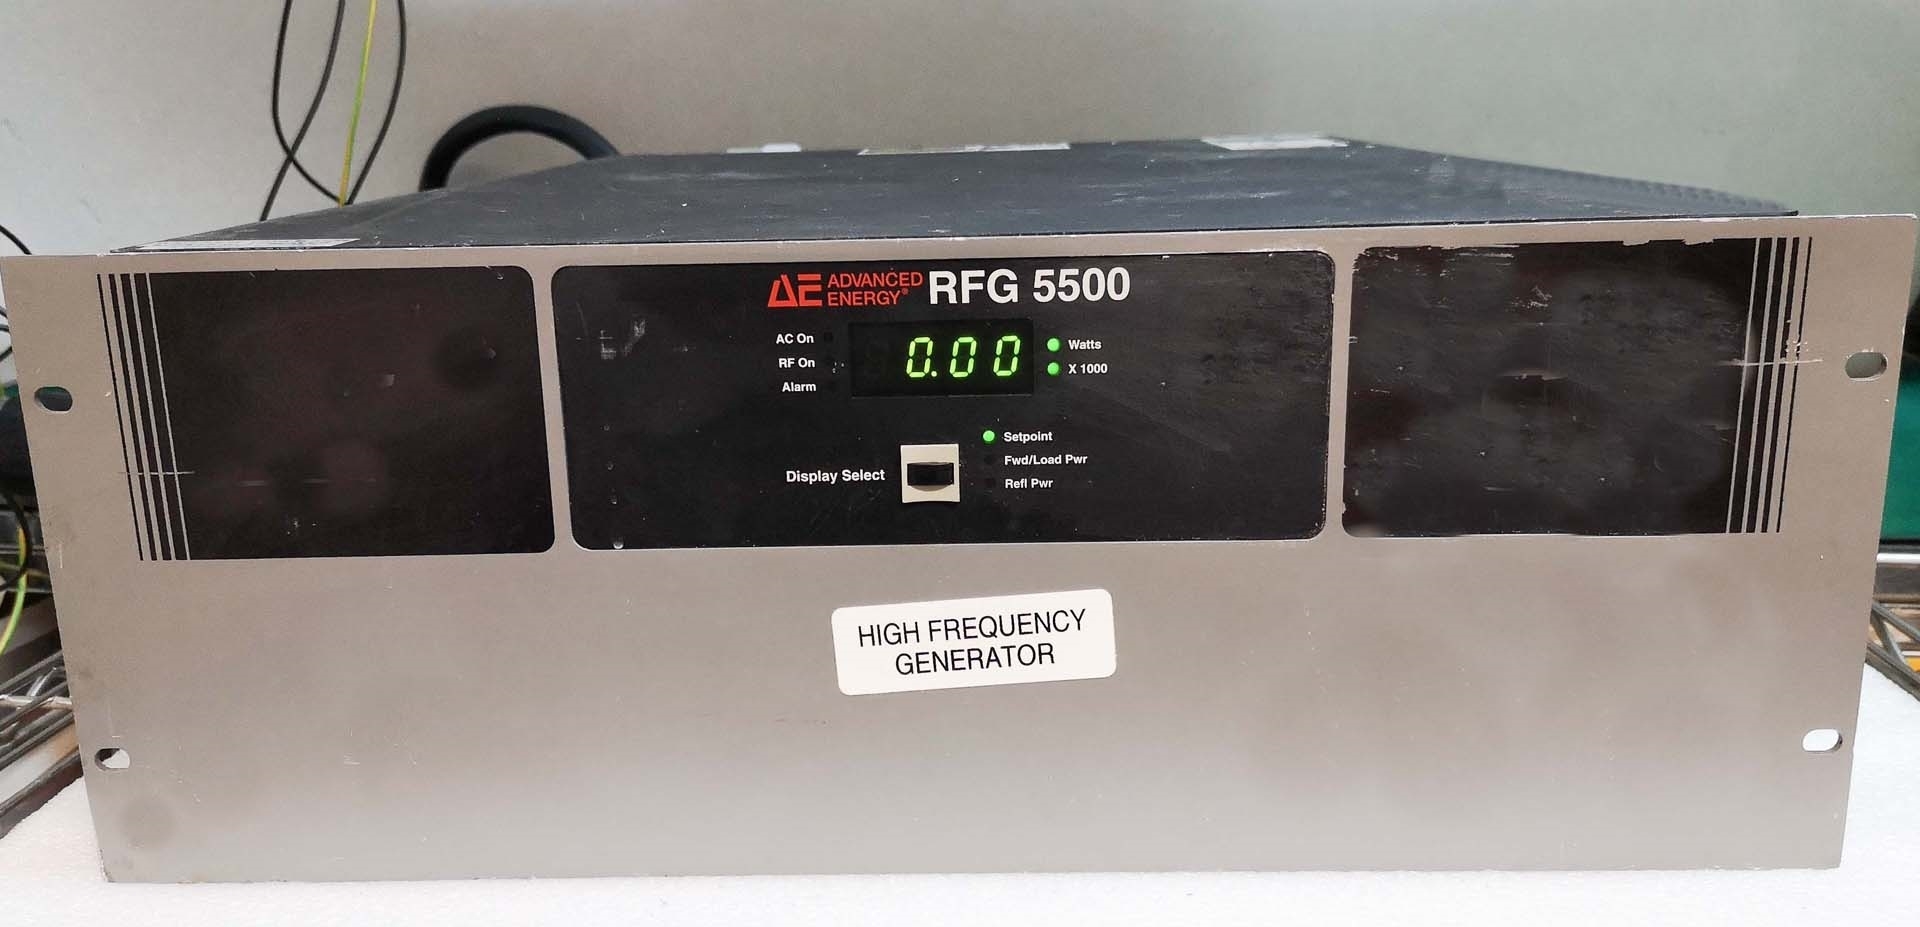 ADVANCED ENERGY RFG 5500